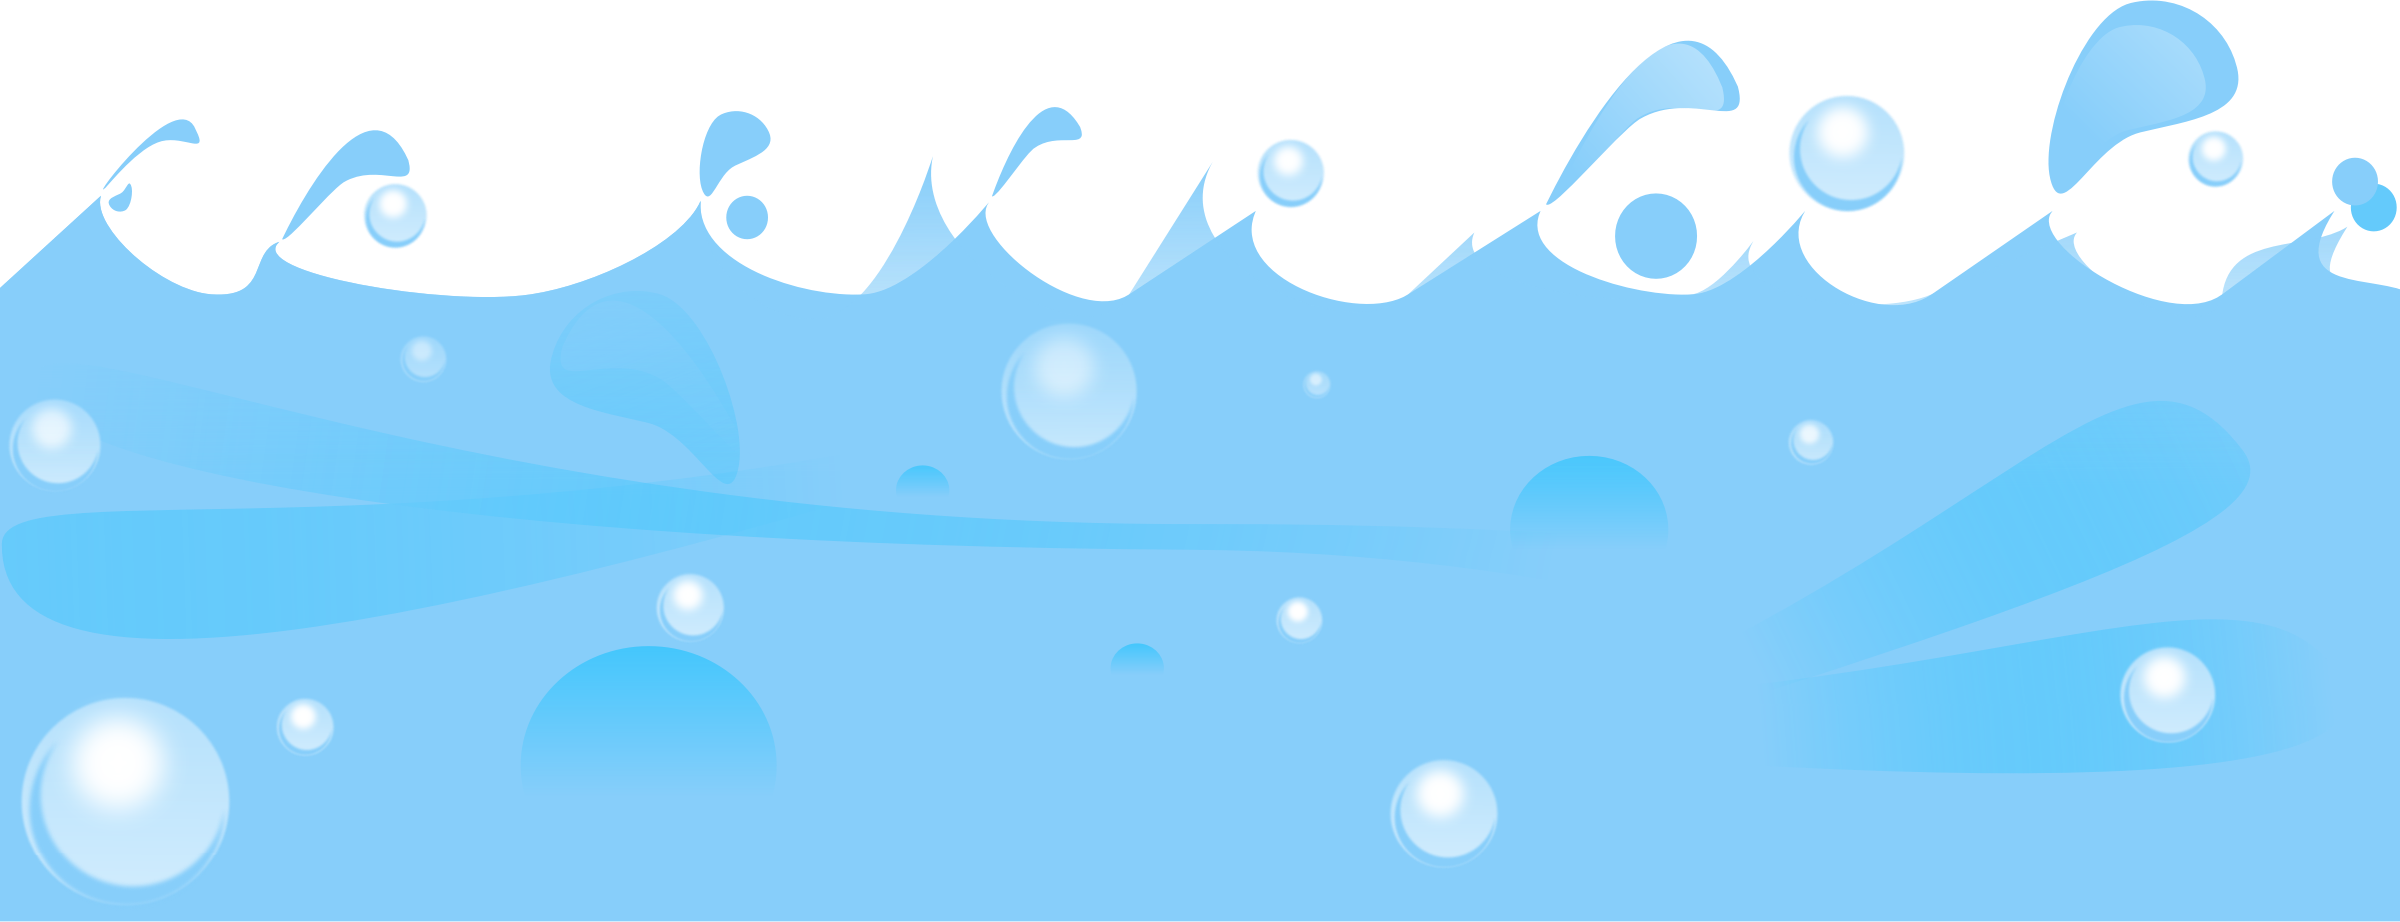 Fish clipart water. Logo big image png